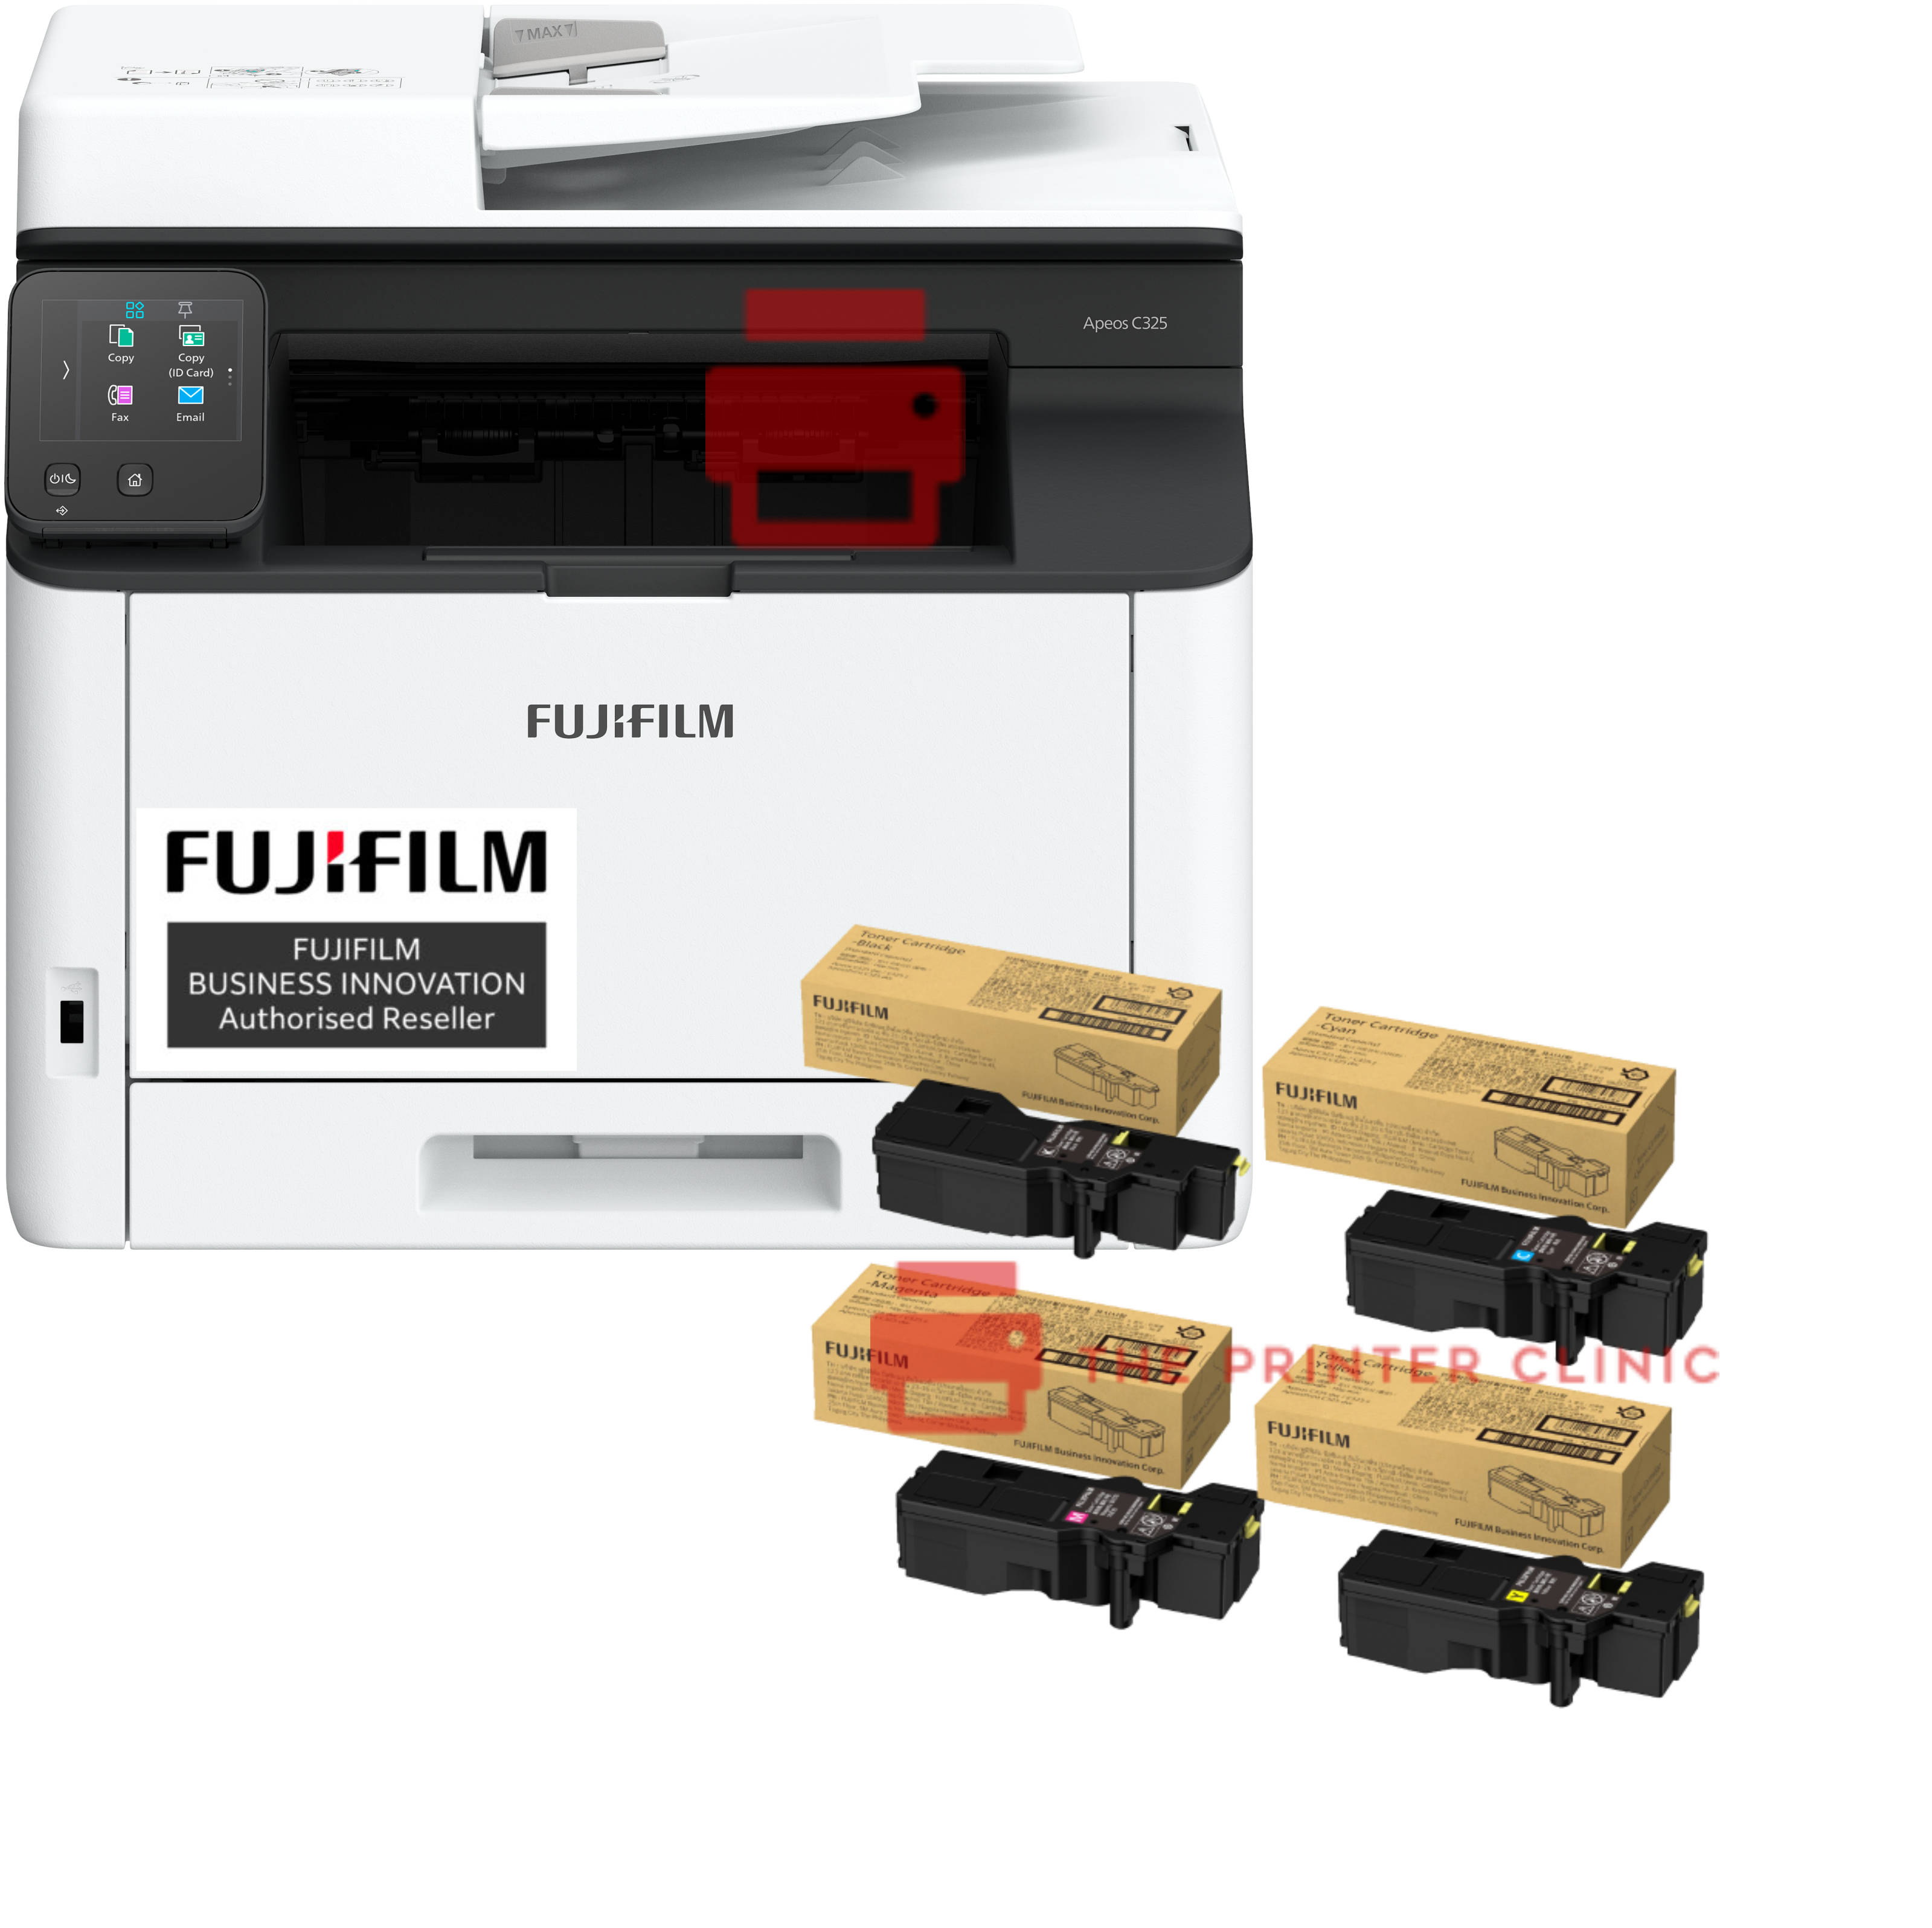 FUJIFILM Apeos C325z Wireless A4 Colour Multifunction Printer with Extra Set of Genuine Toner